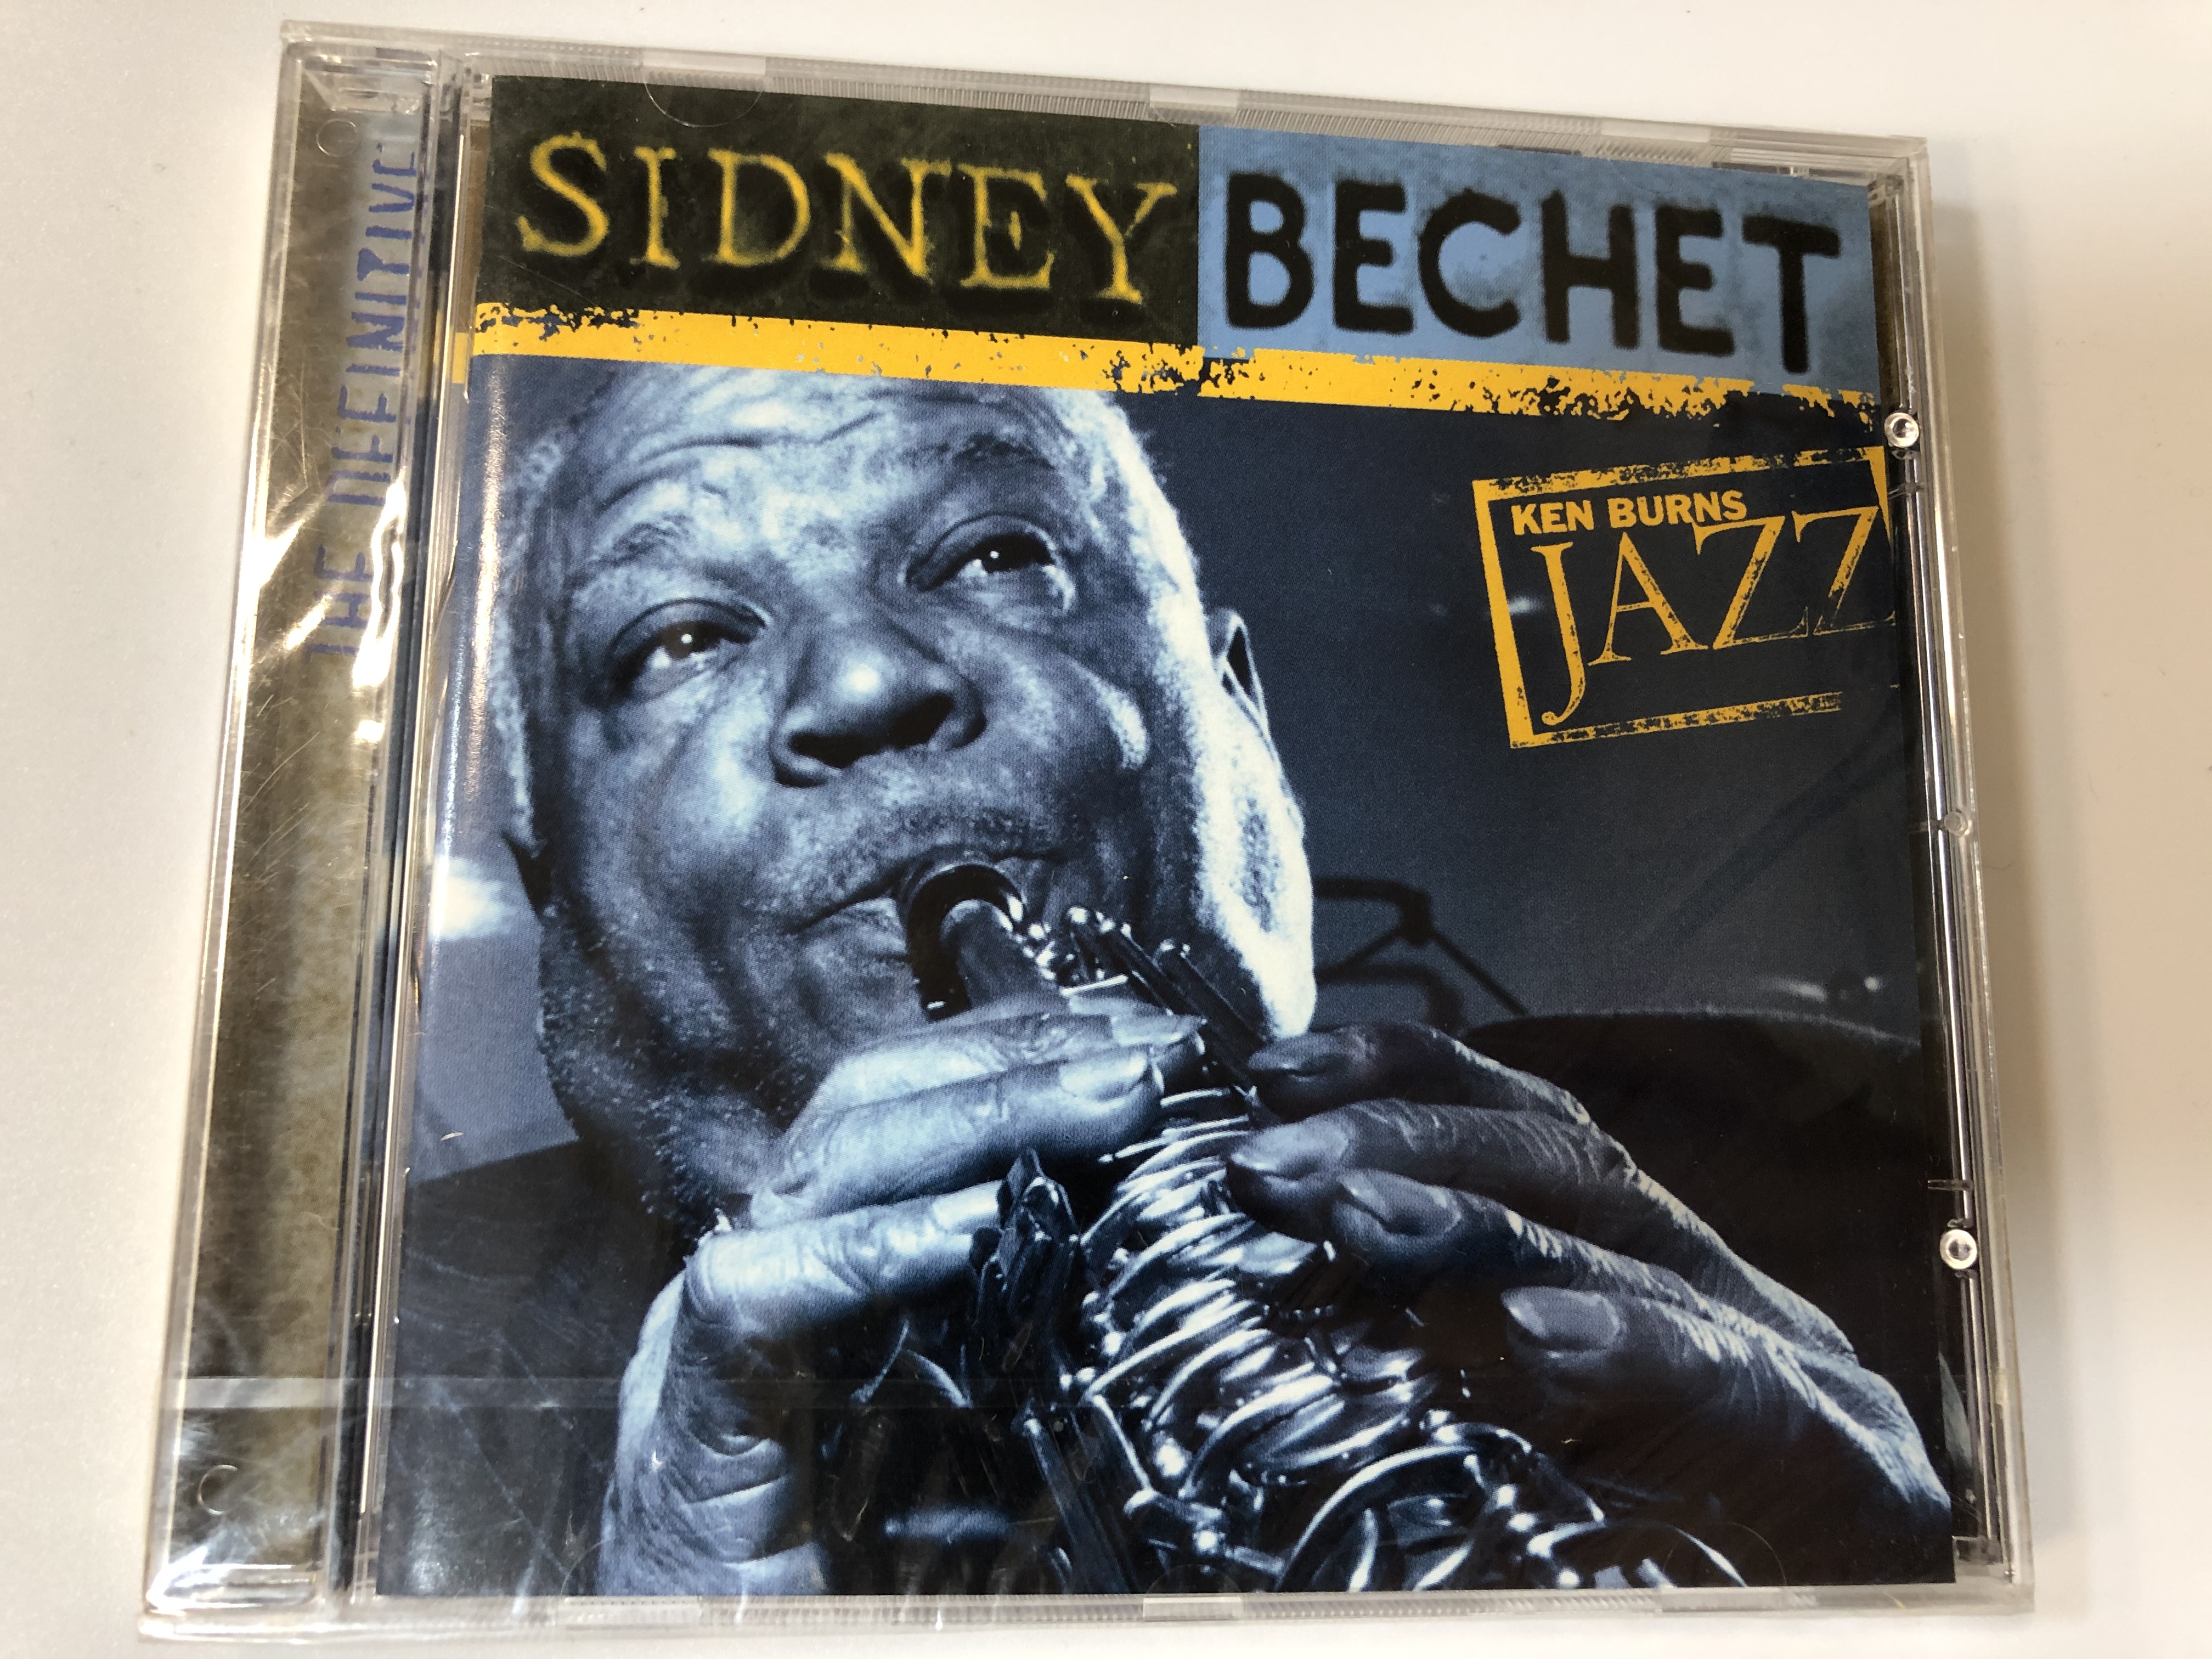 sidney-bechet-ken-burns-jazz-legacy-audio-cd-2000-501031-2-1-.jpg